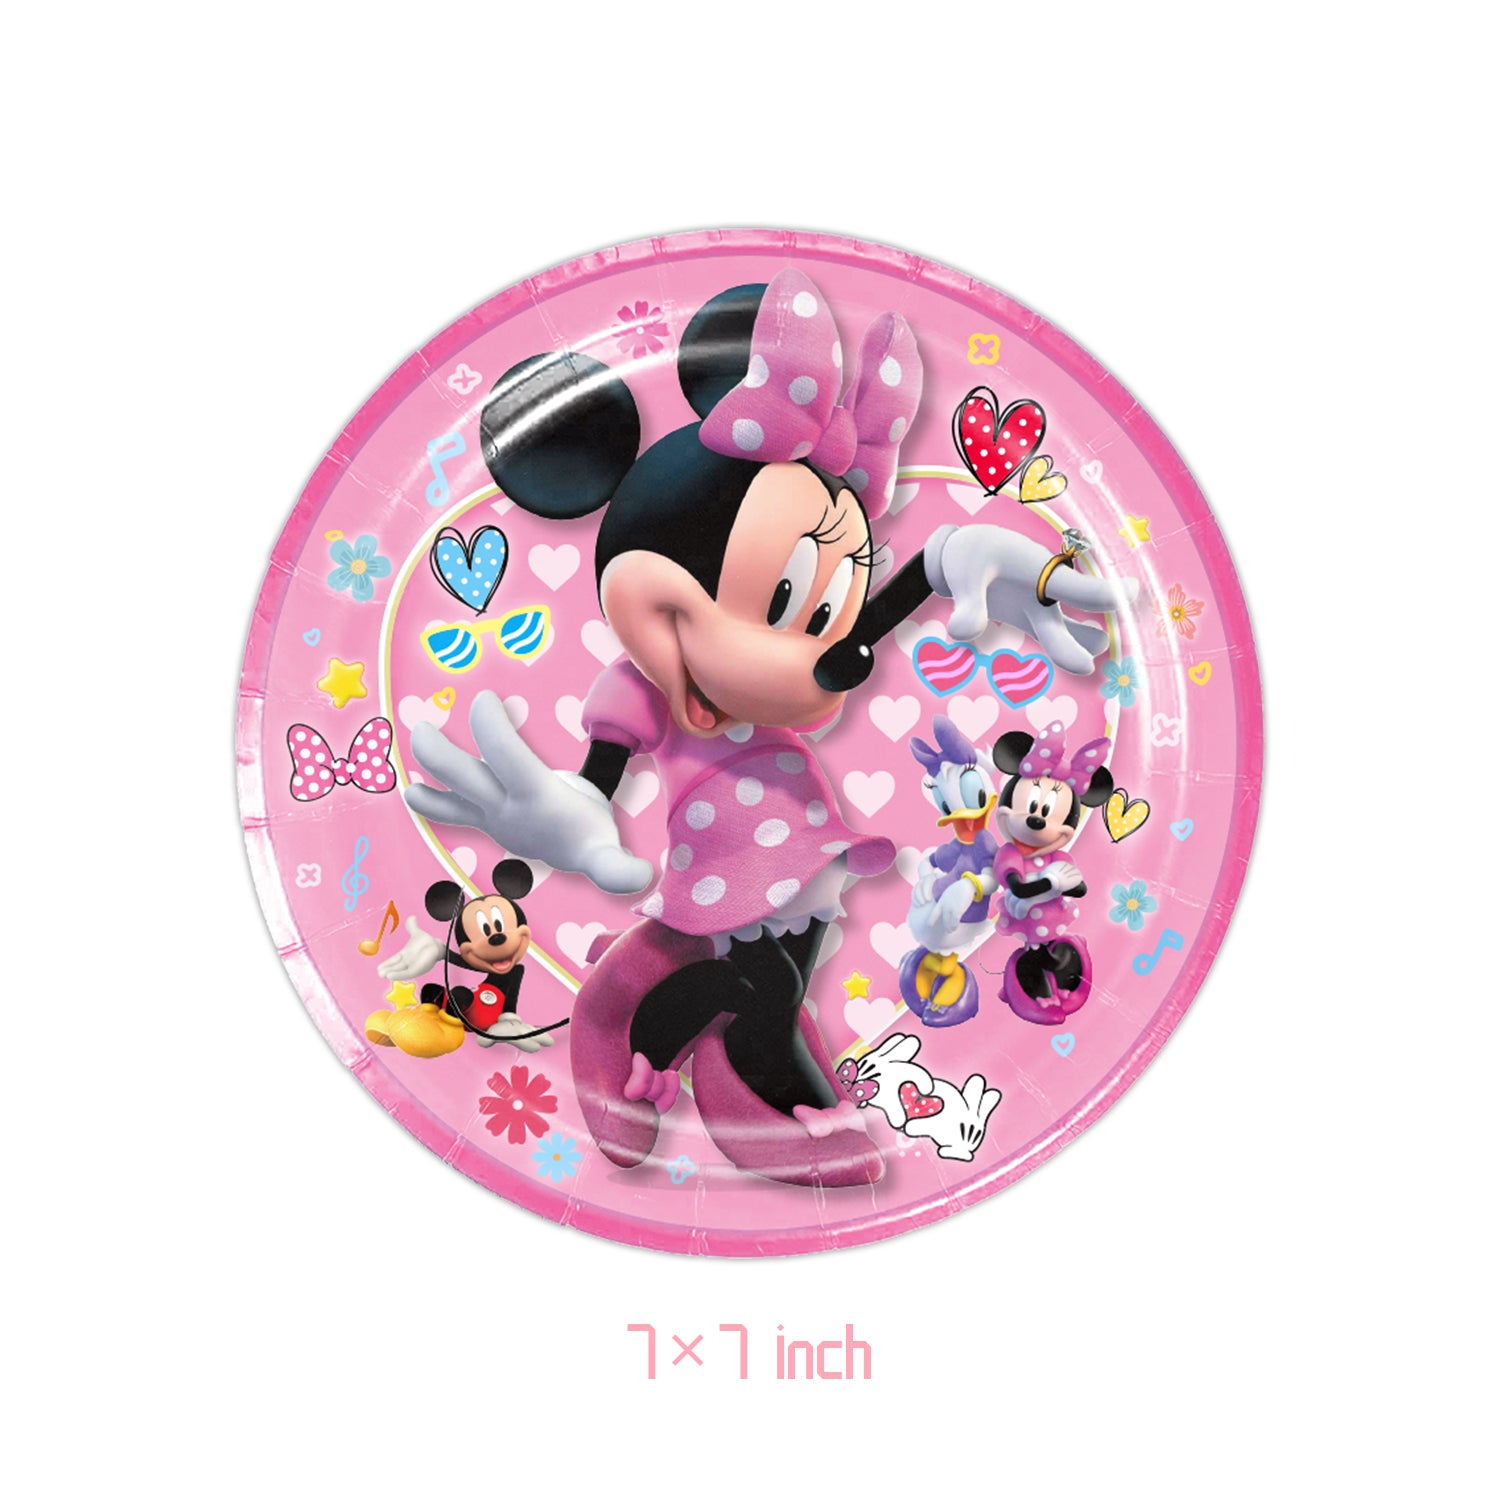 Minnie Mouse Birthday Supplies.